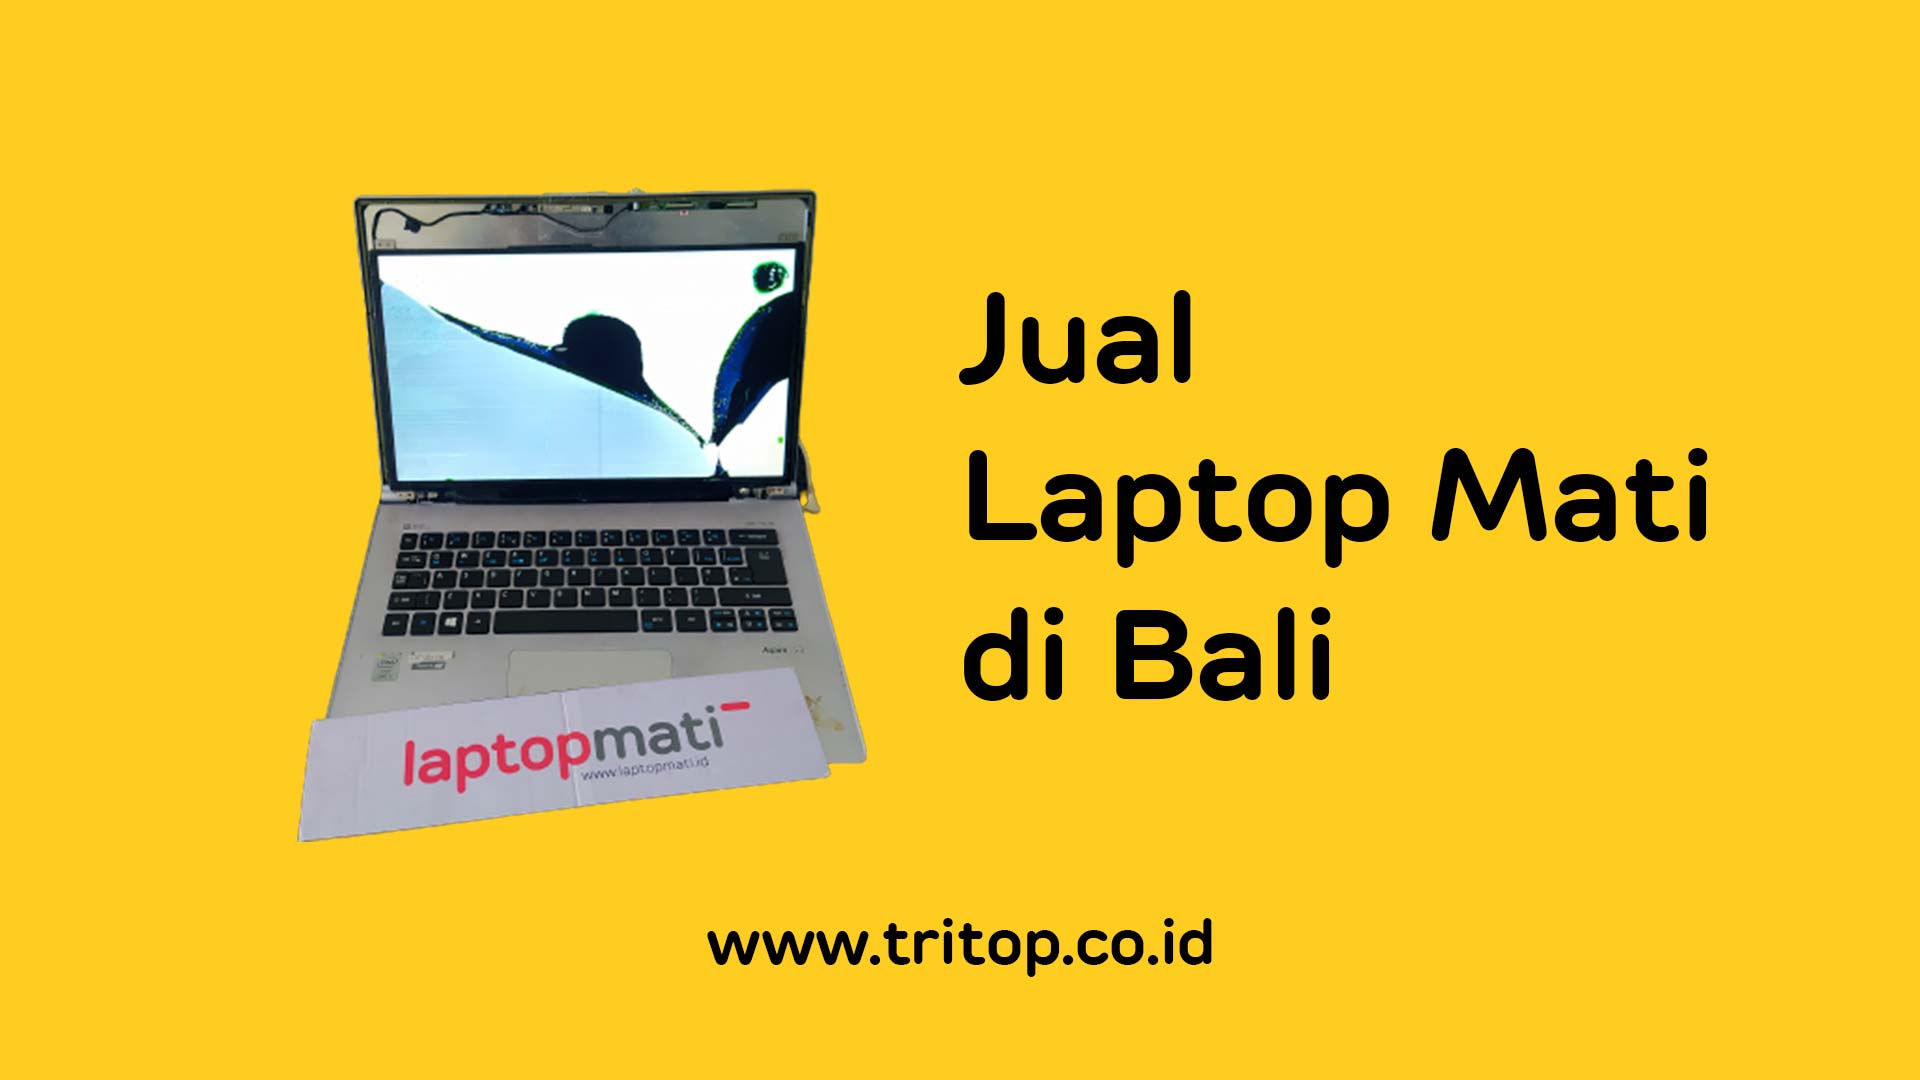 Jual Laptop Mati Bali